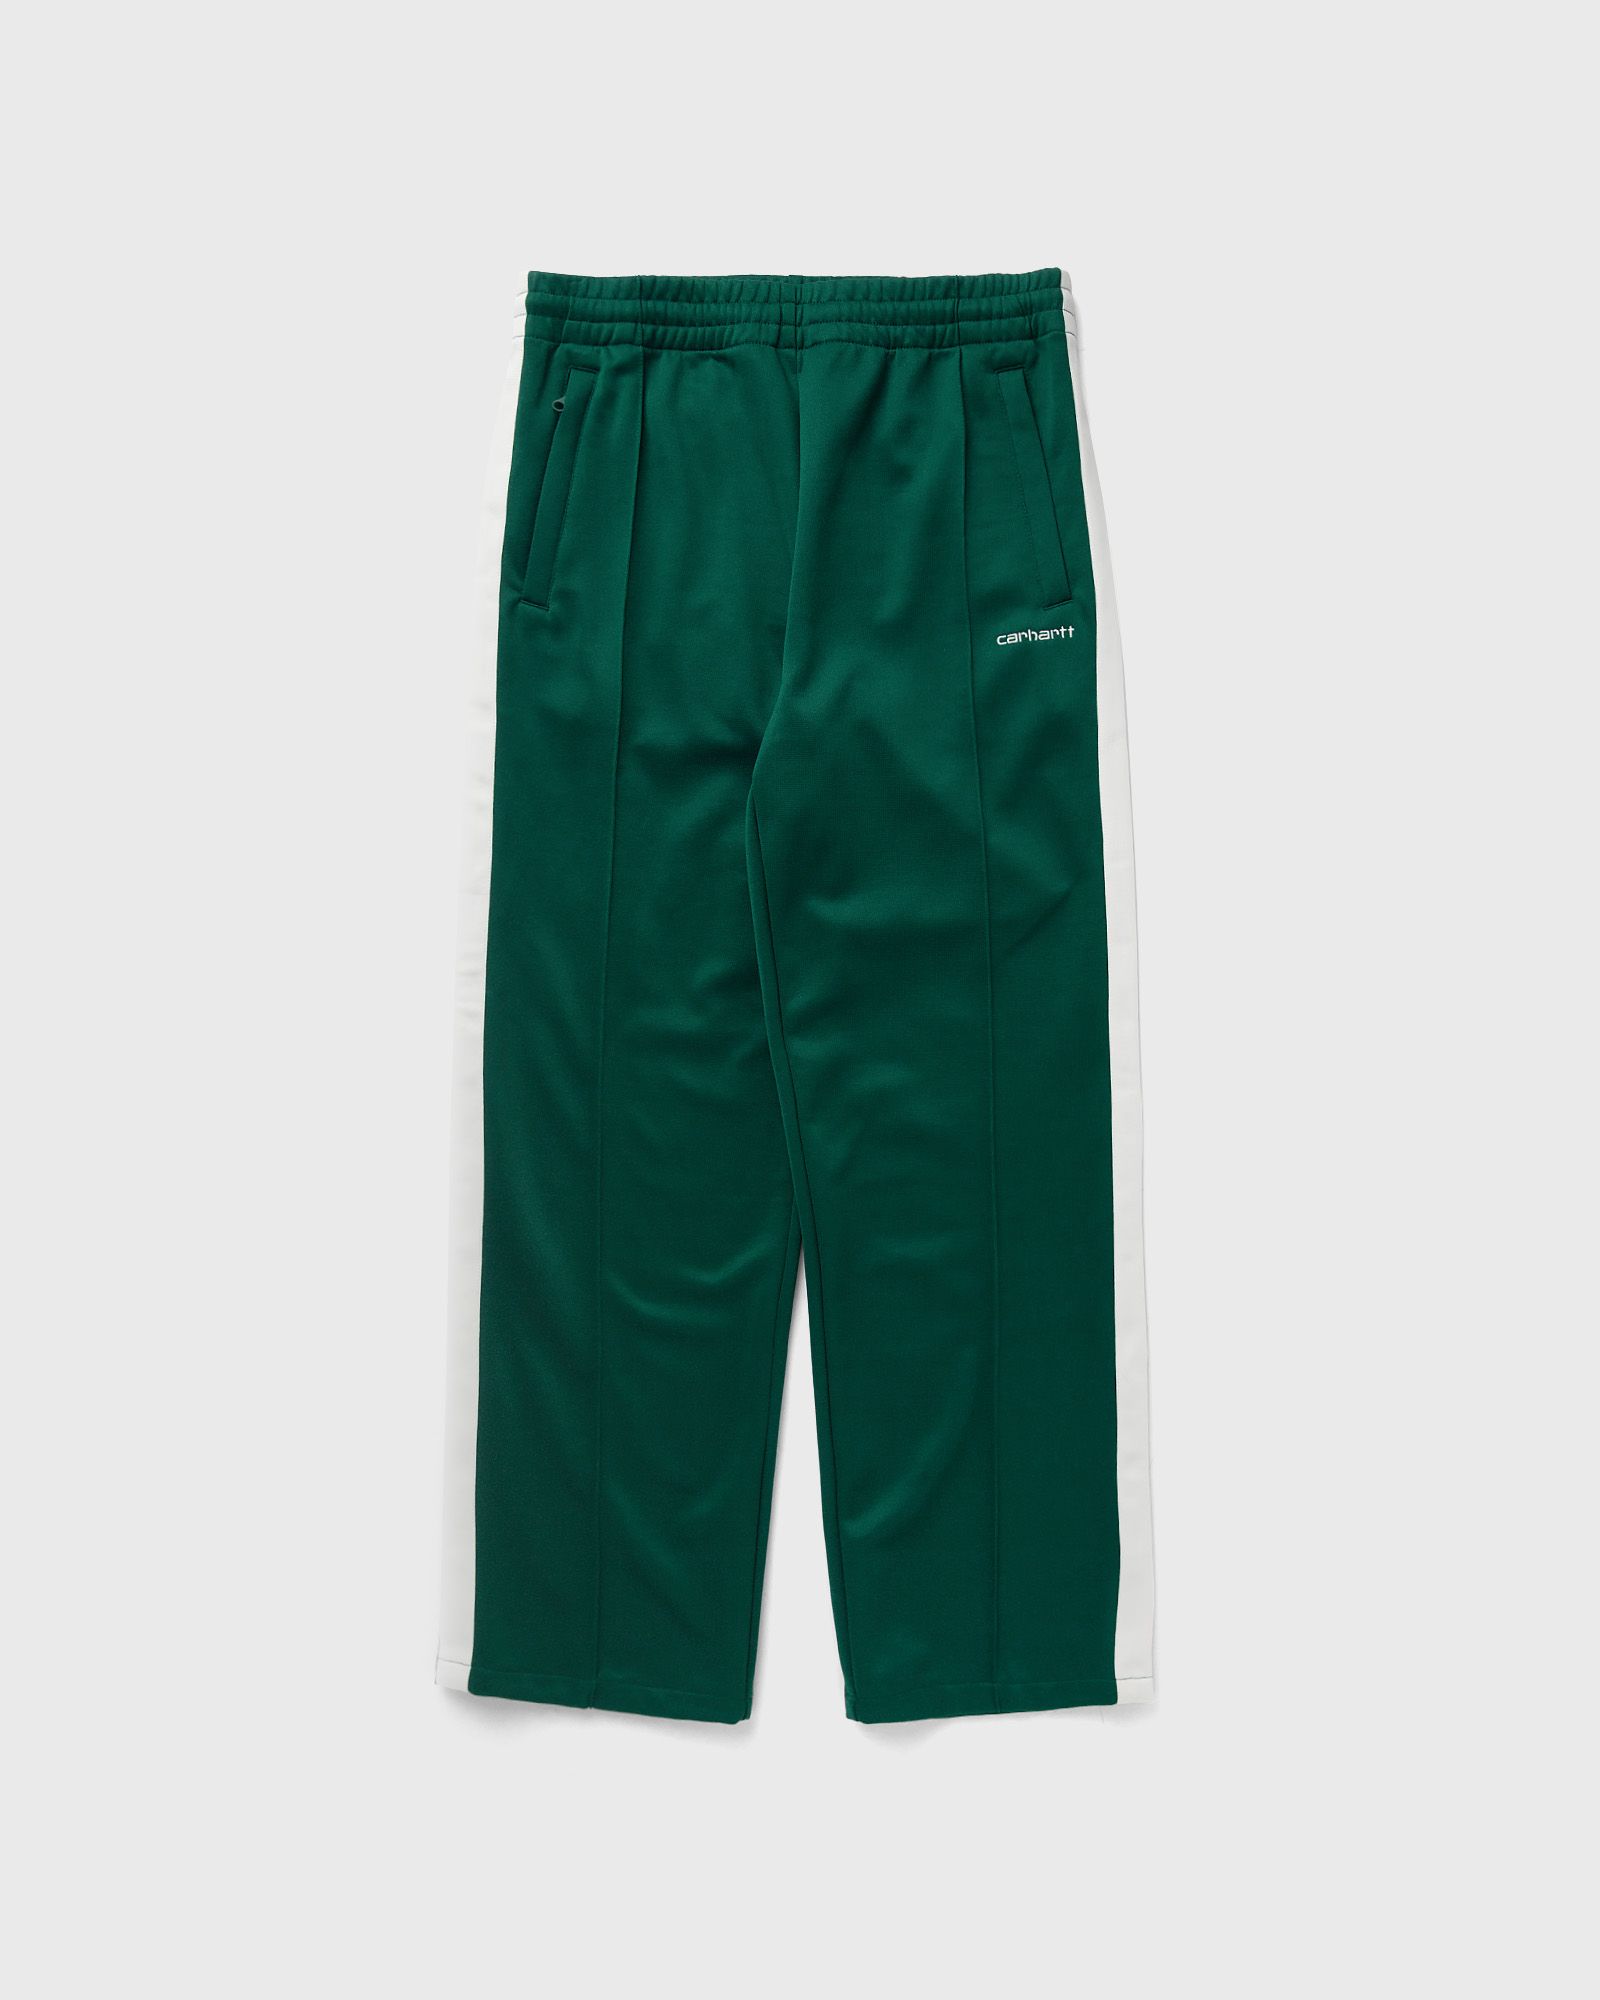 Carhartt WIP Benchill Sweat Pant men Sweatpants green in Größe:S von Carhartt WIP